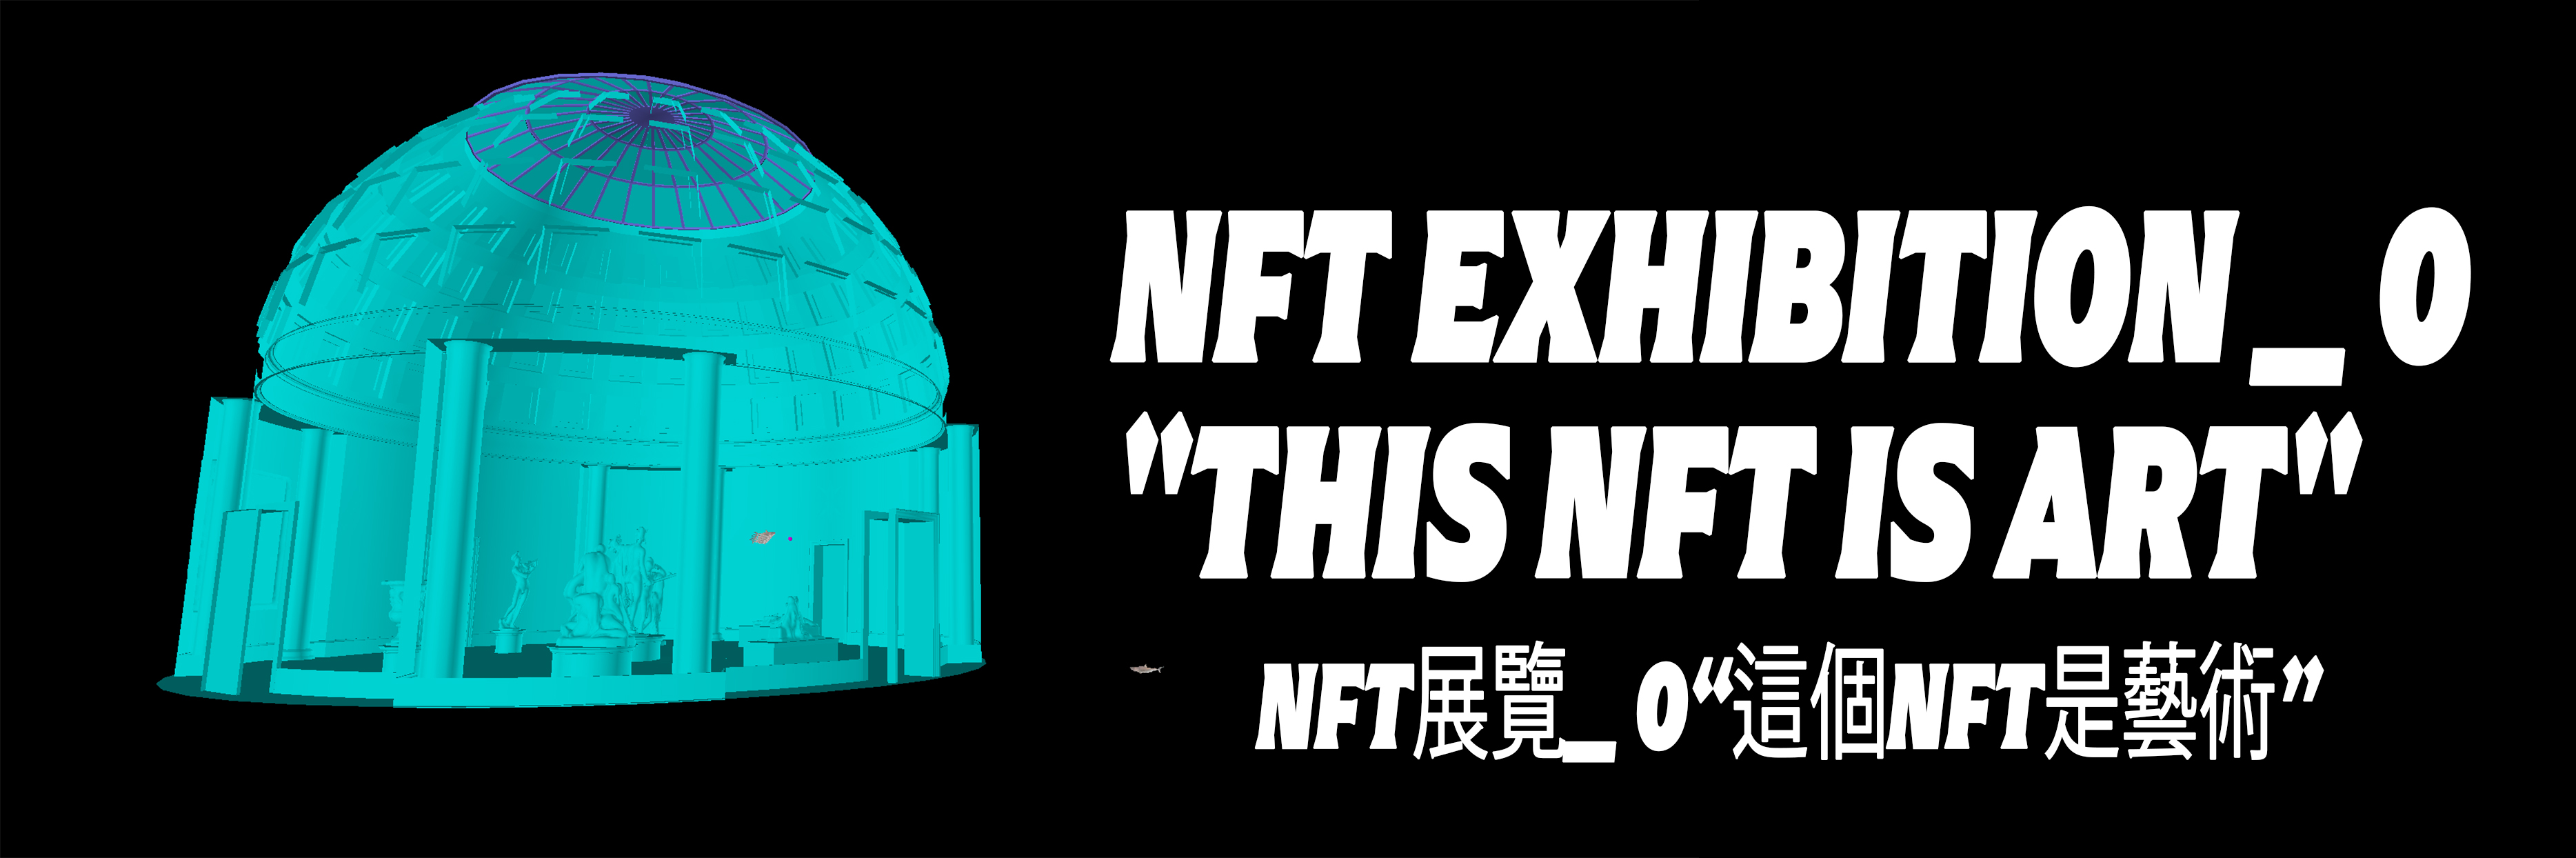 NFT exhibition _ 0     "This NFT Is Art"